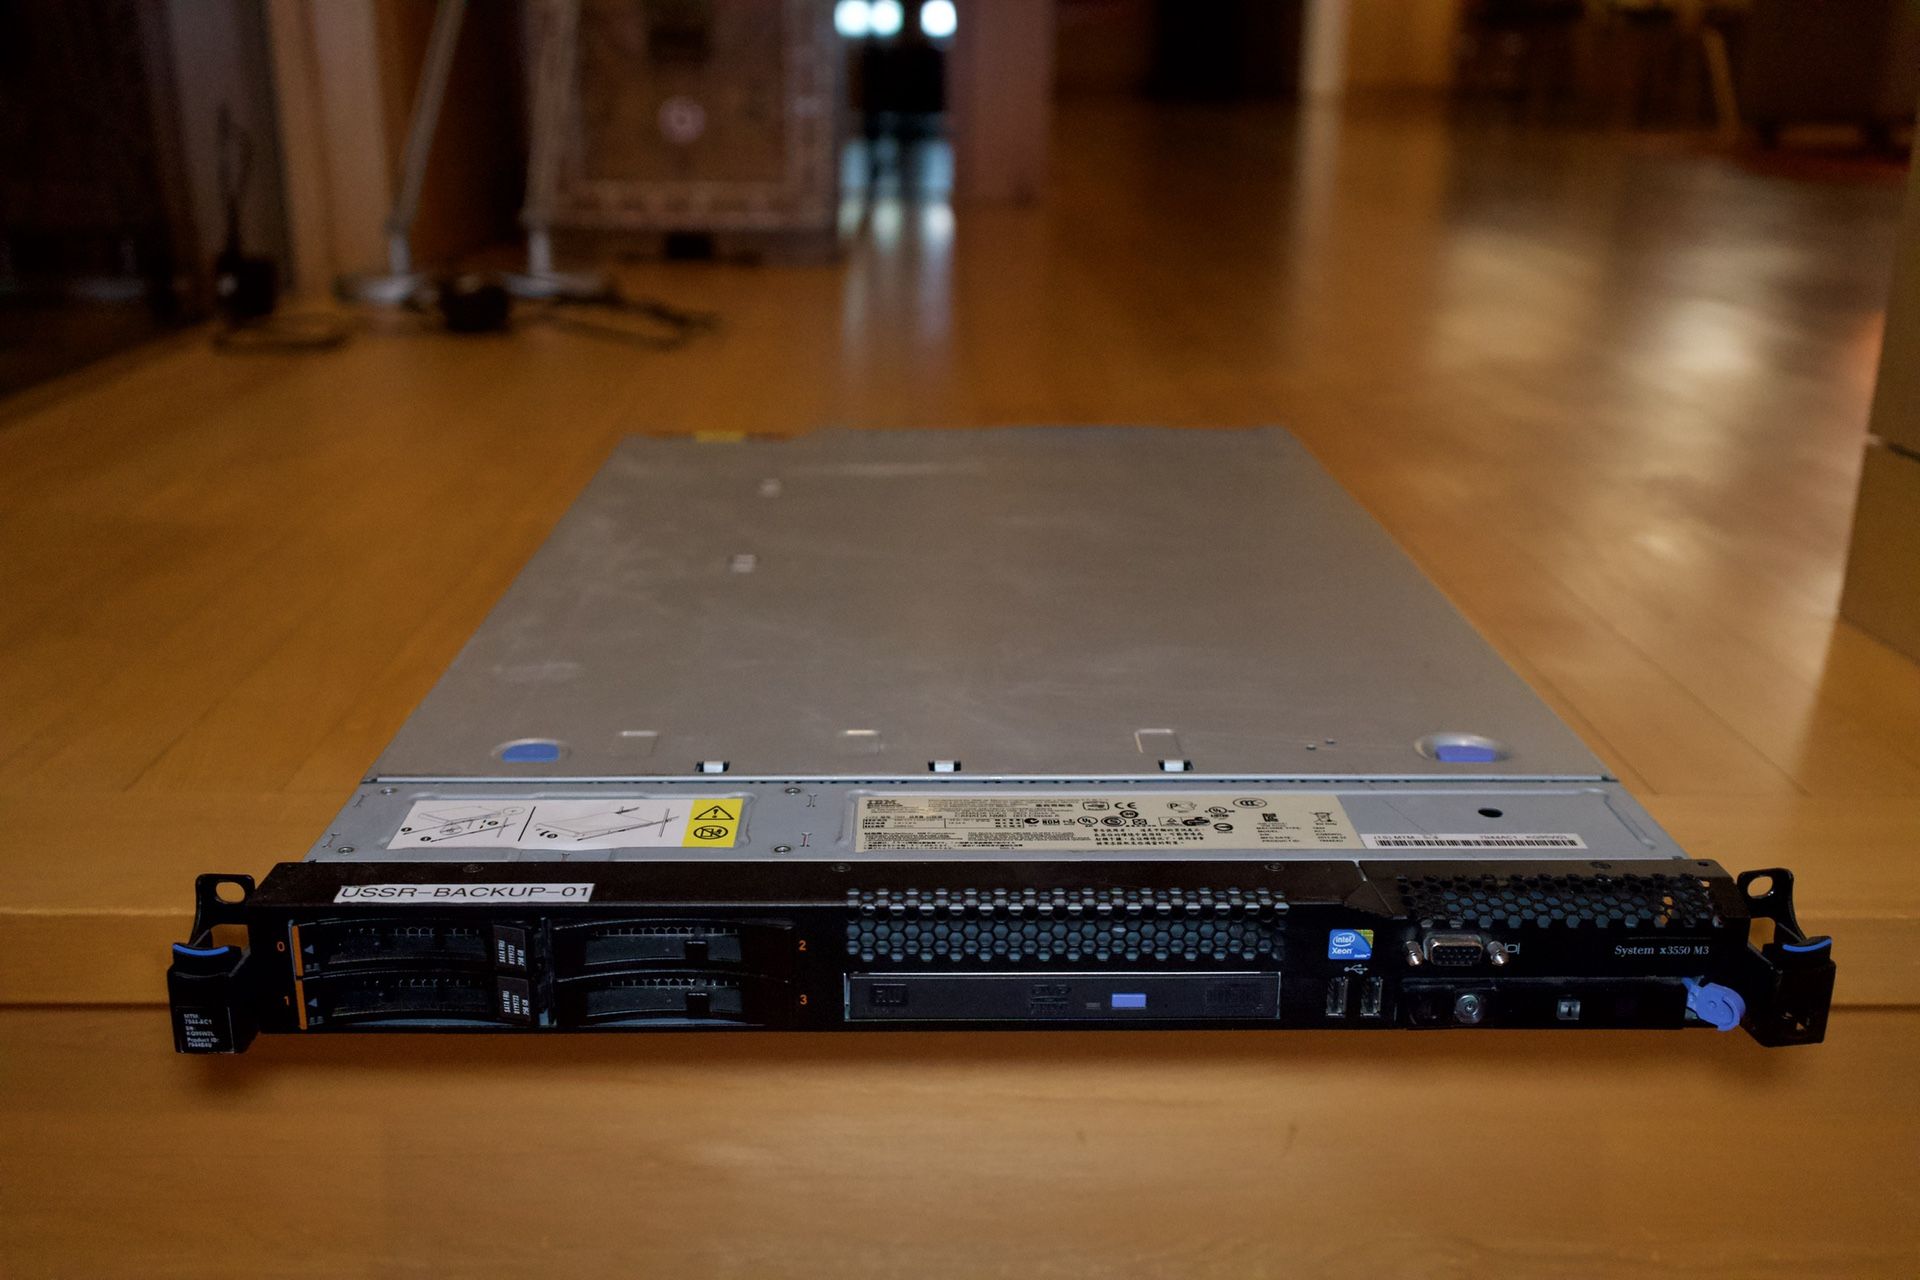 IBM System x3550 M3 SFF server: 1x Intel Xeon E5520 2.2 GHz 4-core CPU, 6GB DDR3-1066, no HDDs